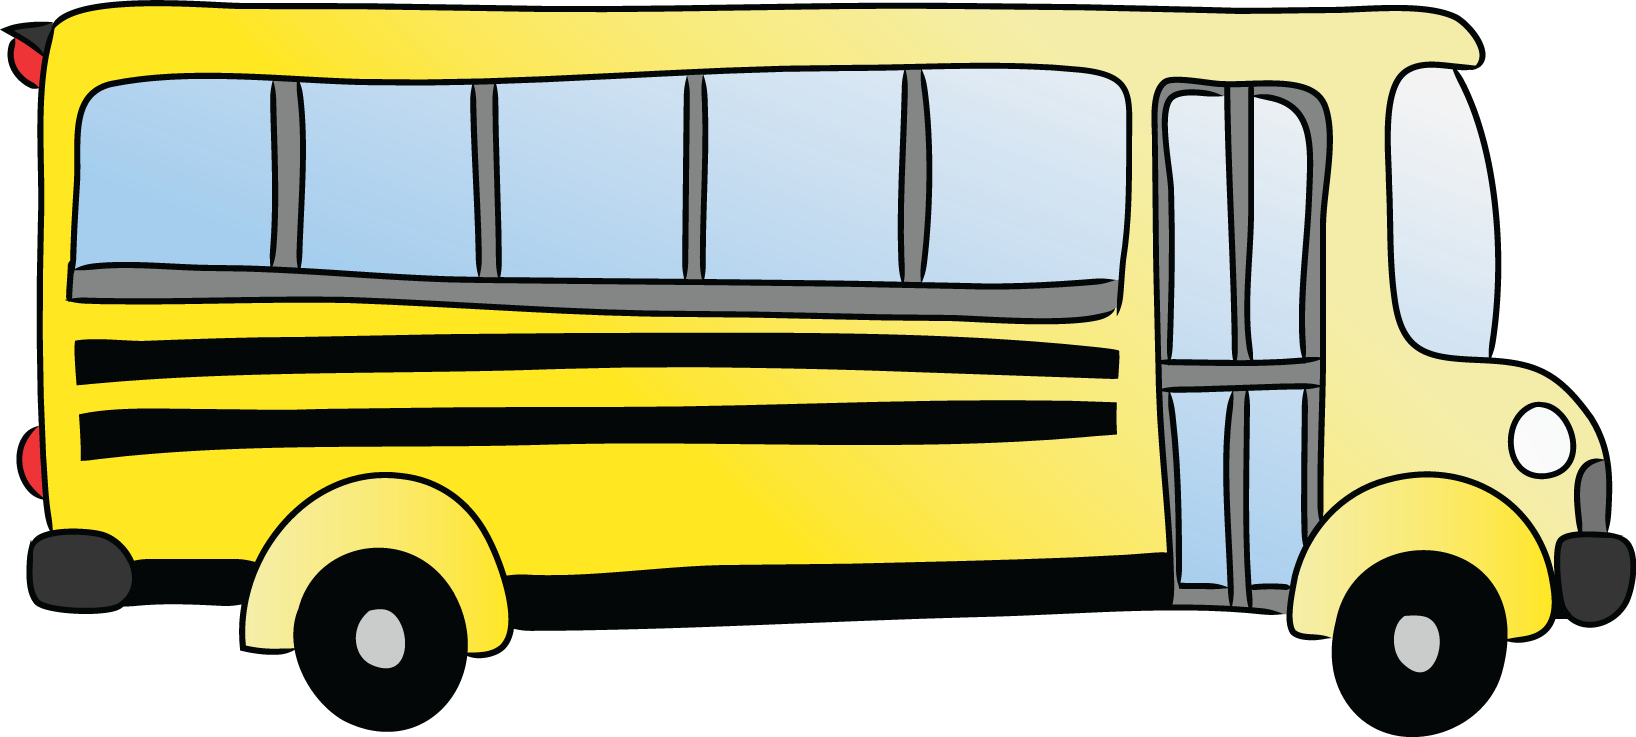 School bus Drawing Clip art